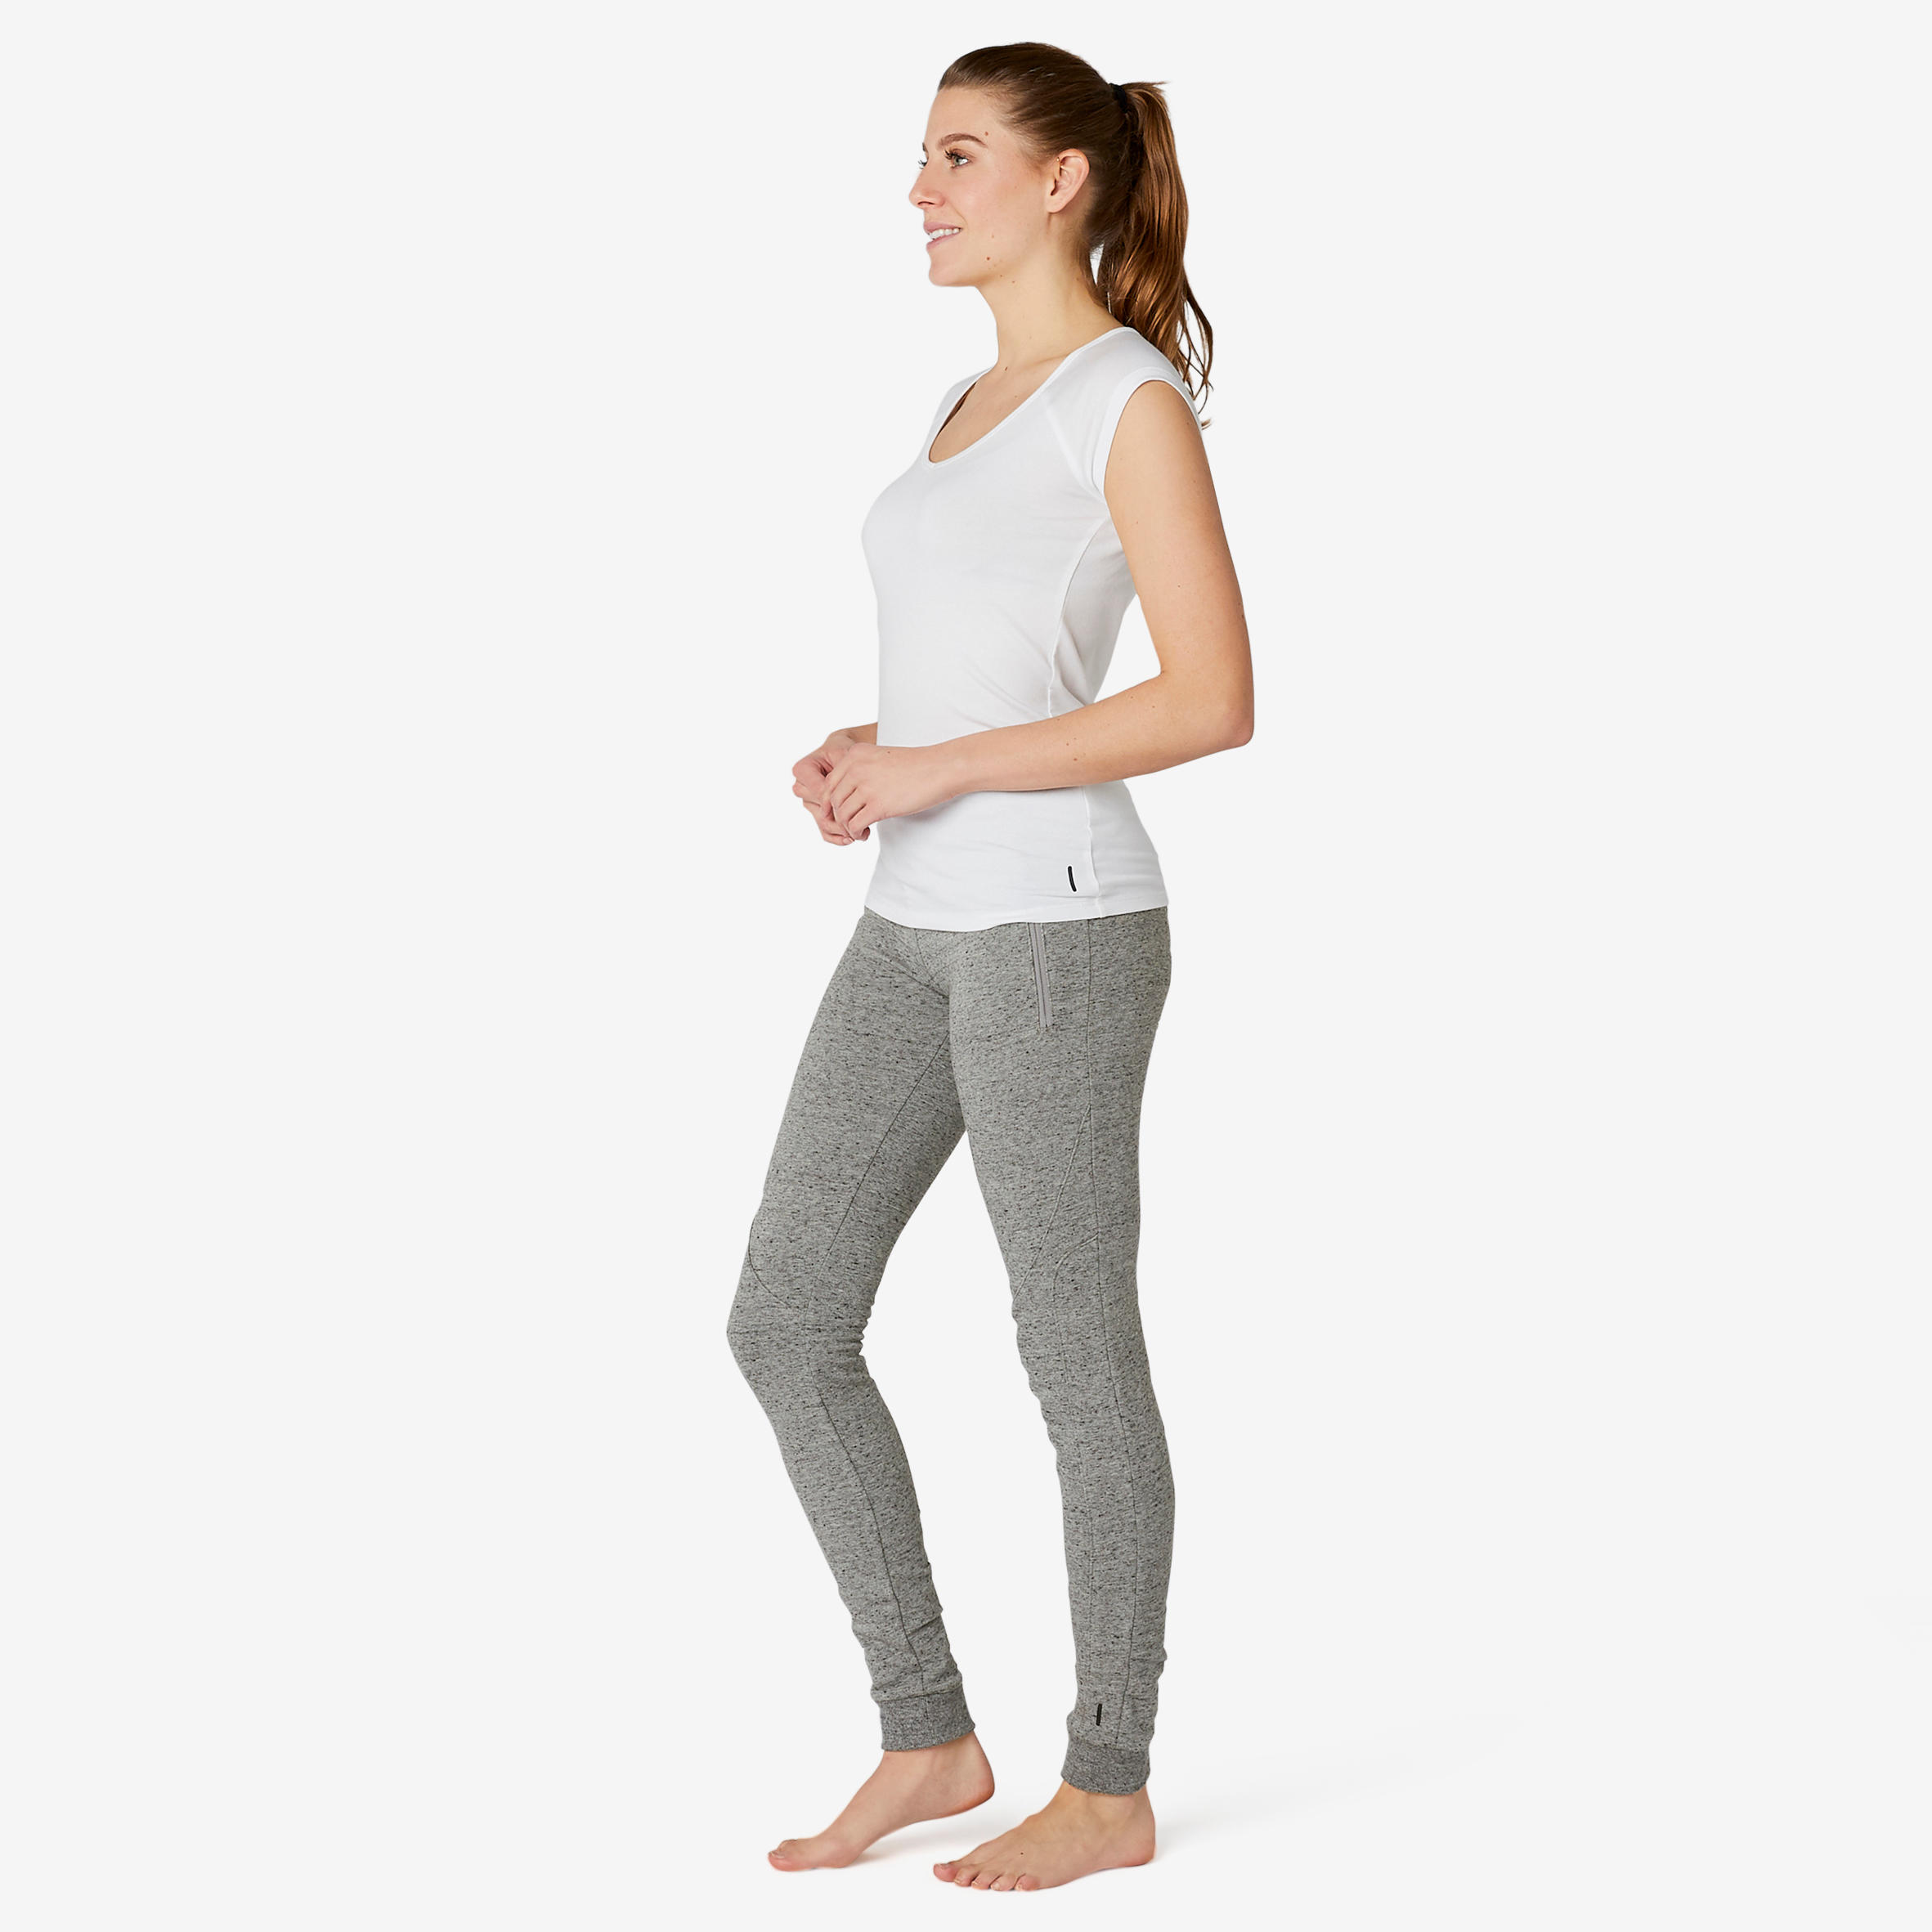 Women's Slim-Fit Fitness Jogging Bottoms 520 - Grey 4/7